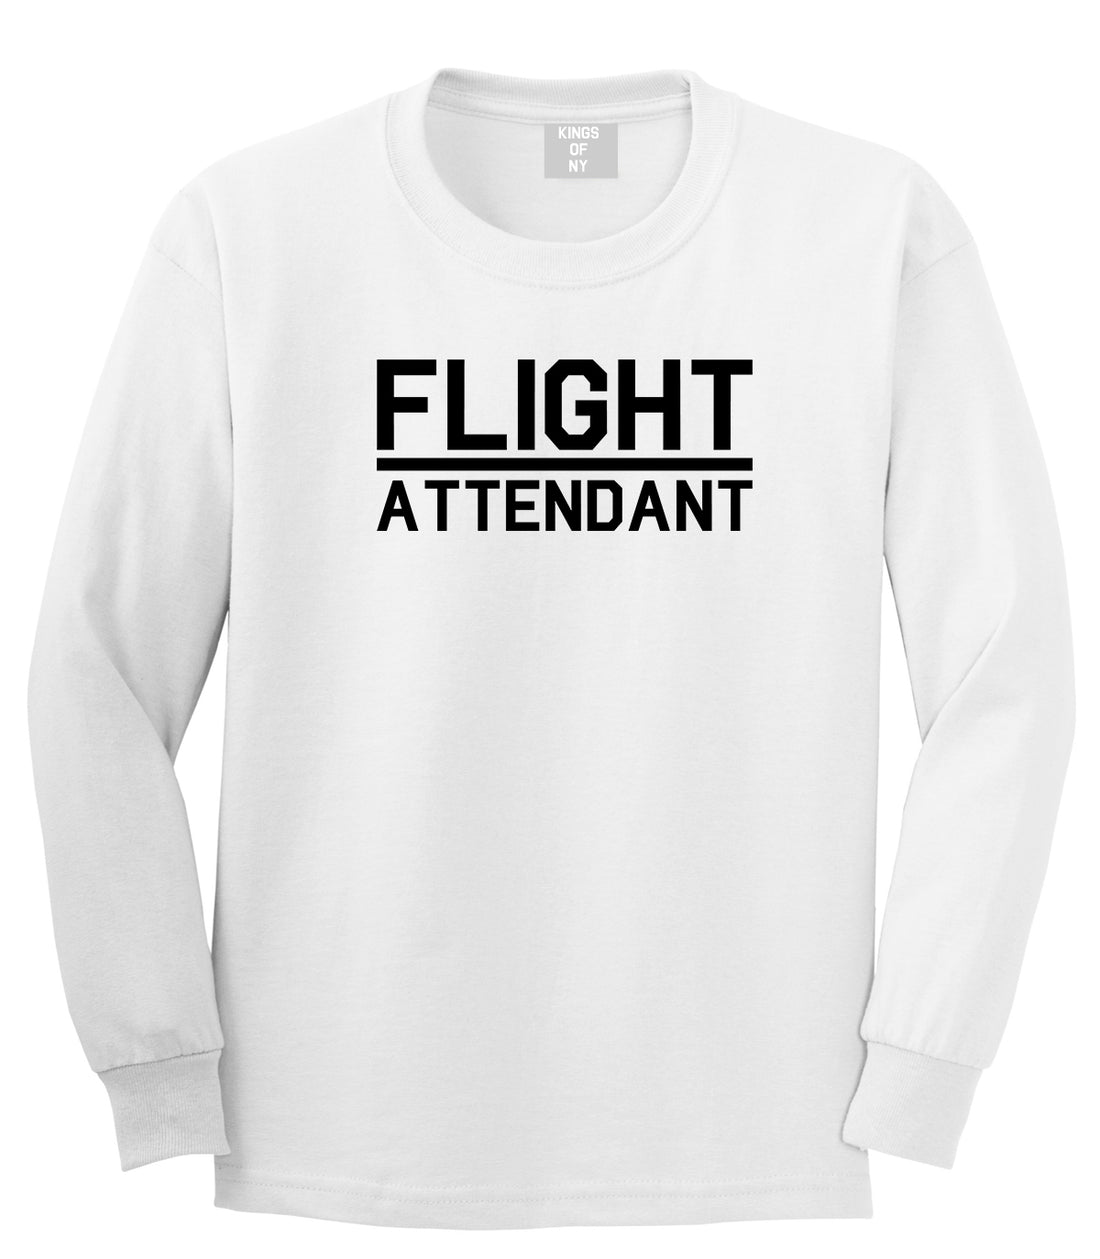 Flight Attendant Stewardess Mens White Long Sleeve T-Shirt by KINGS OF NY